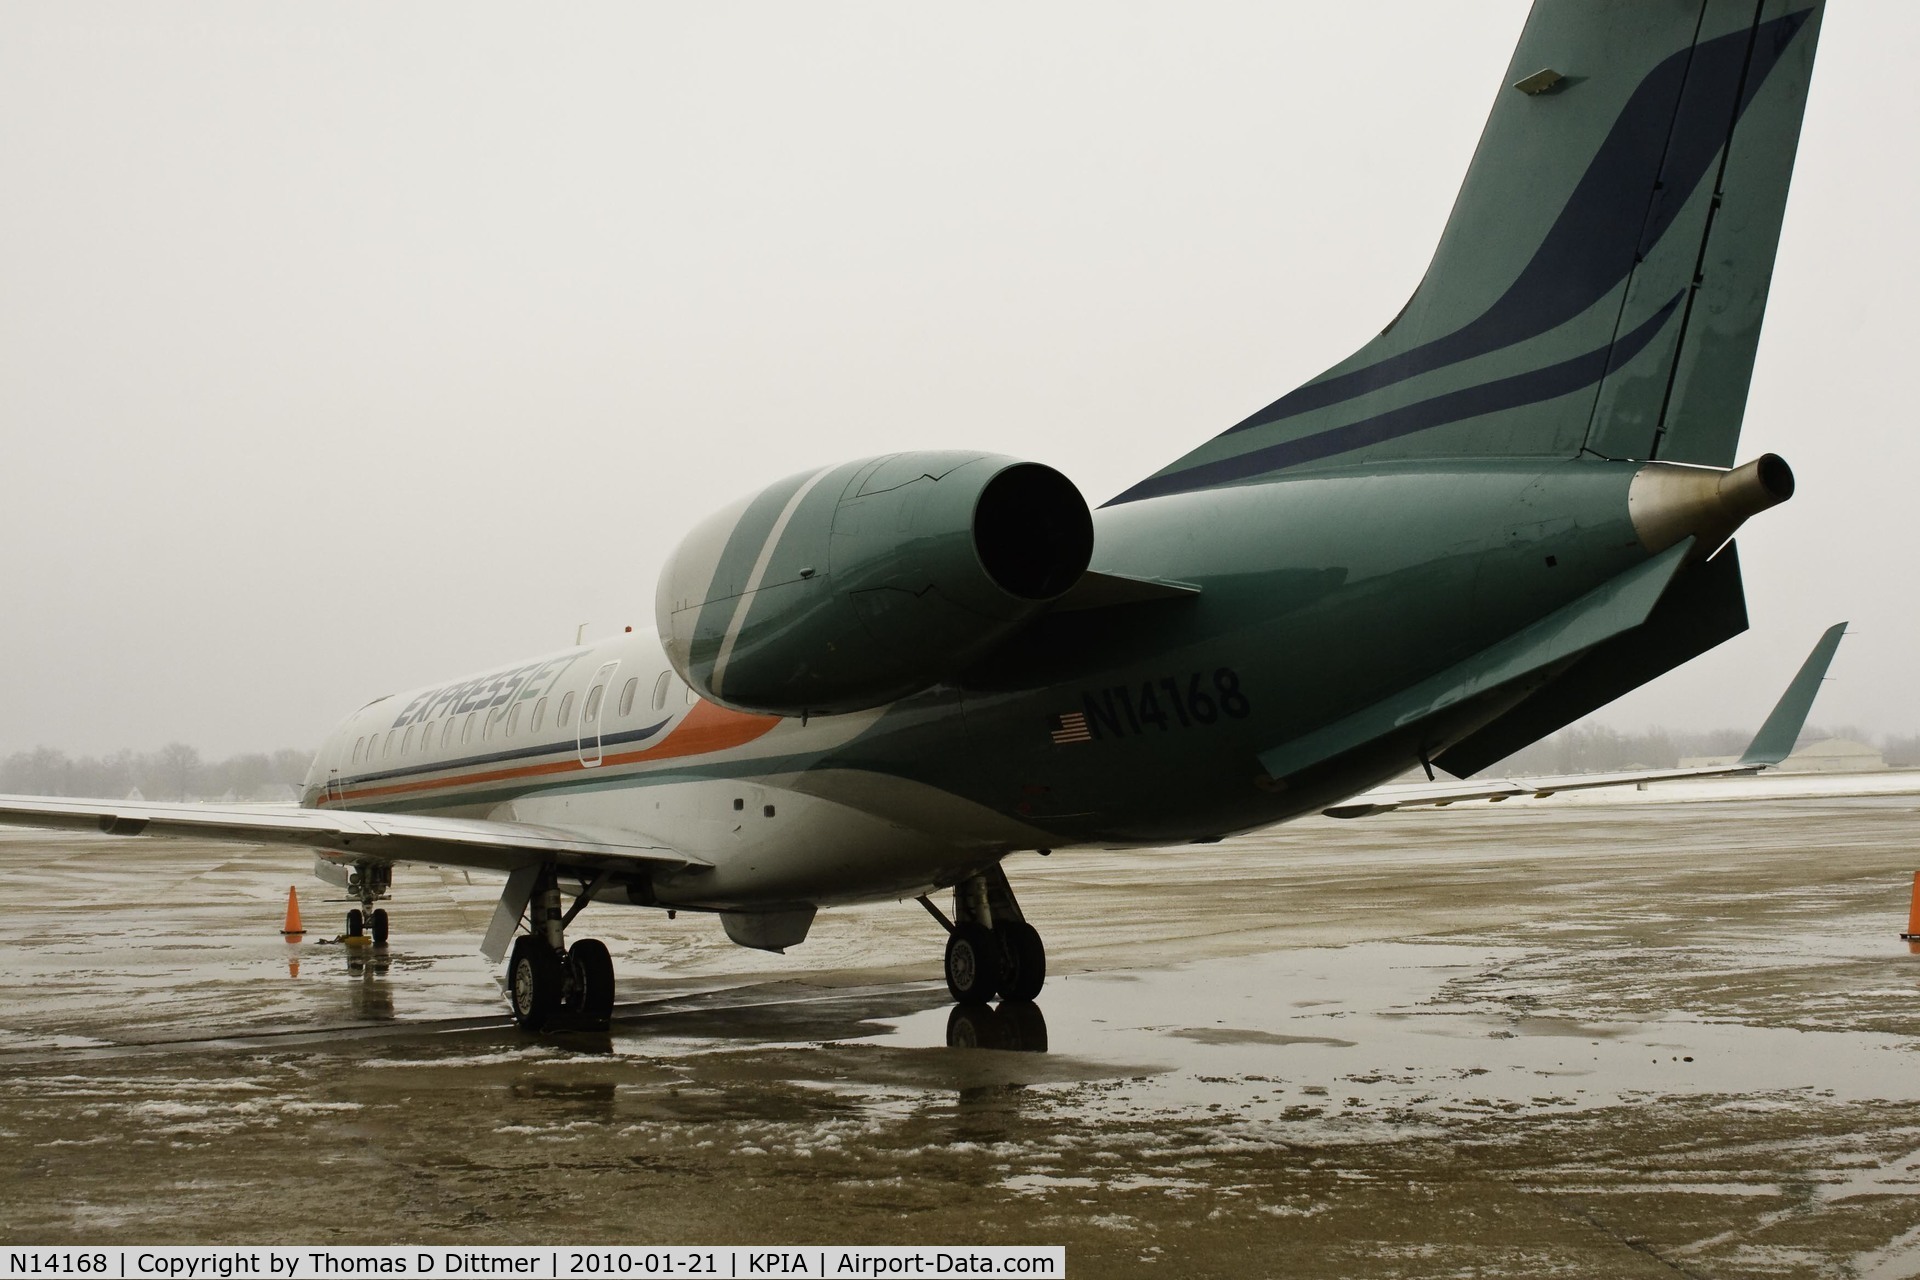 N14168, 2004 Embraer ERJ-145XR (EMB-145XR) C/N 14500840, Express Jet (N14168) left rear view